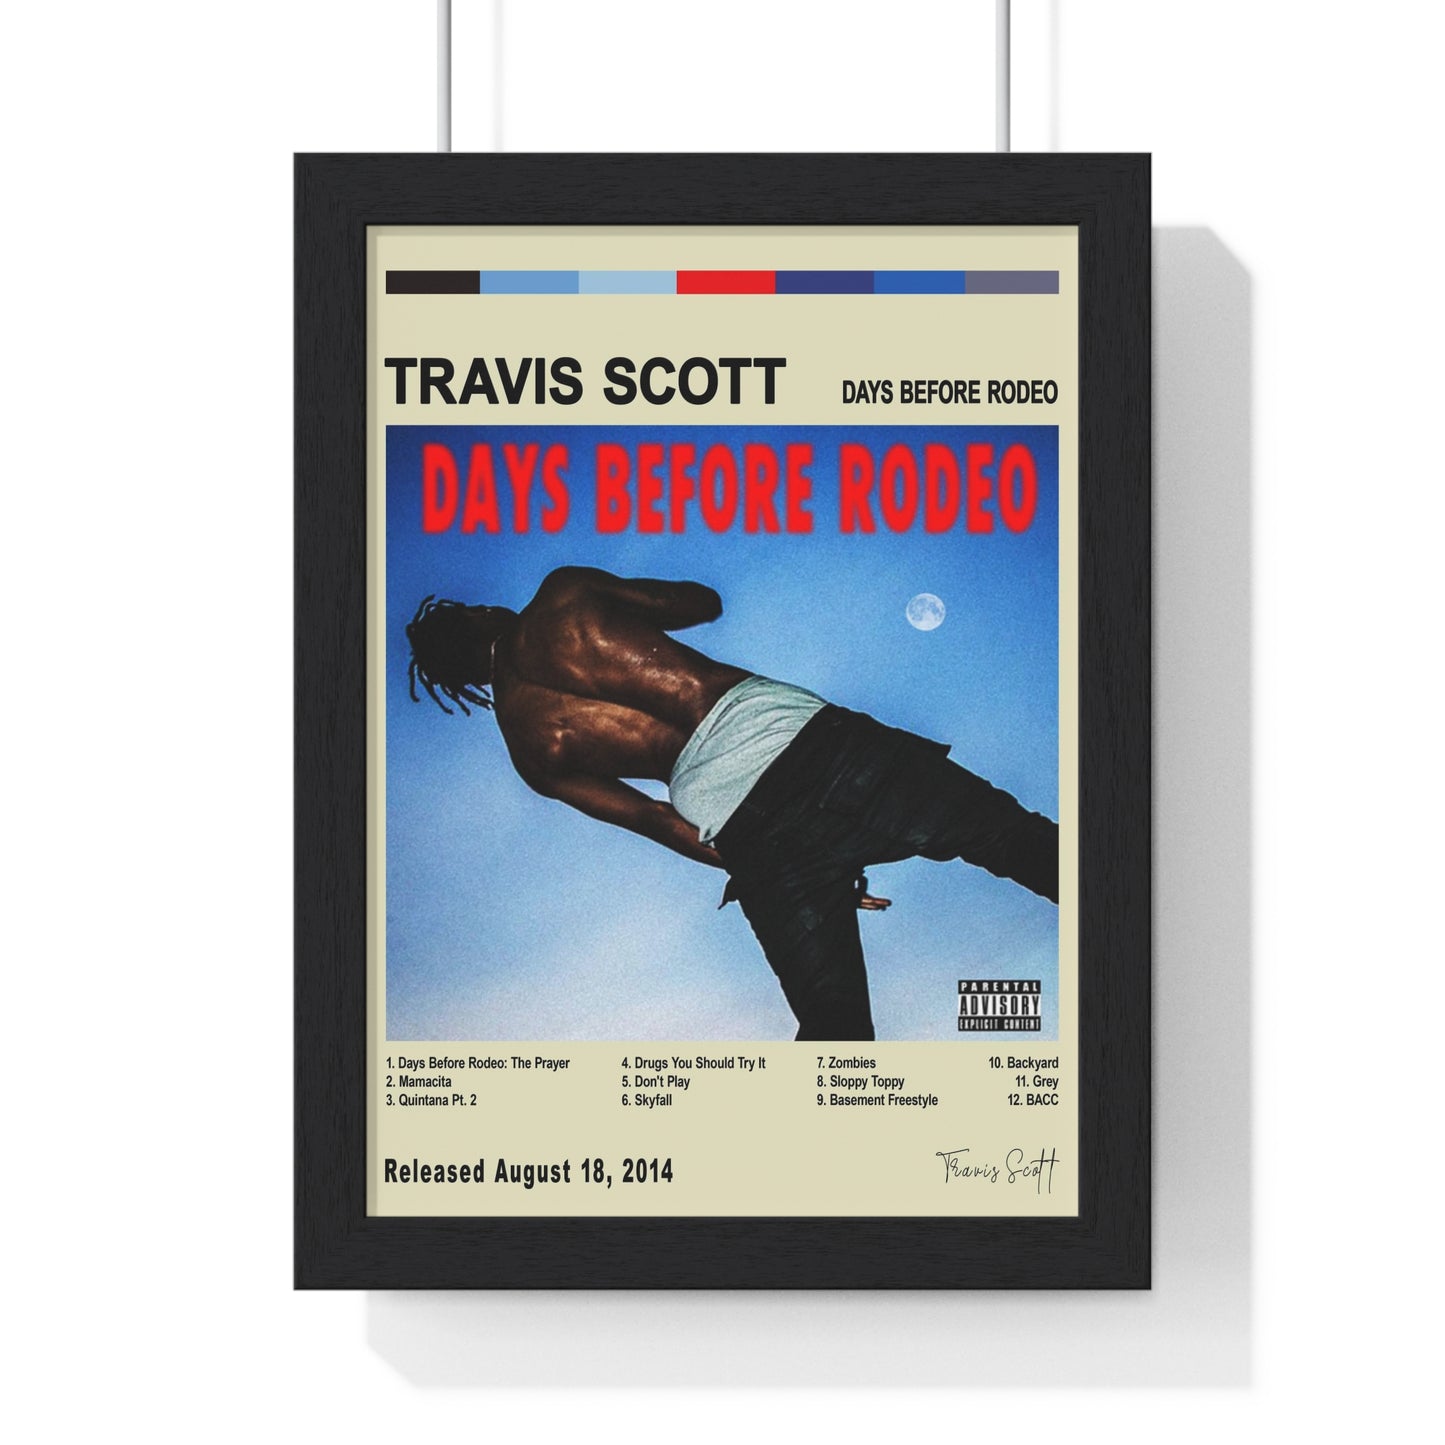 Travis Scott Album Cover Wall Poster